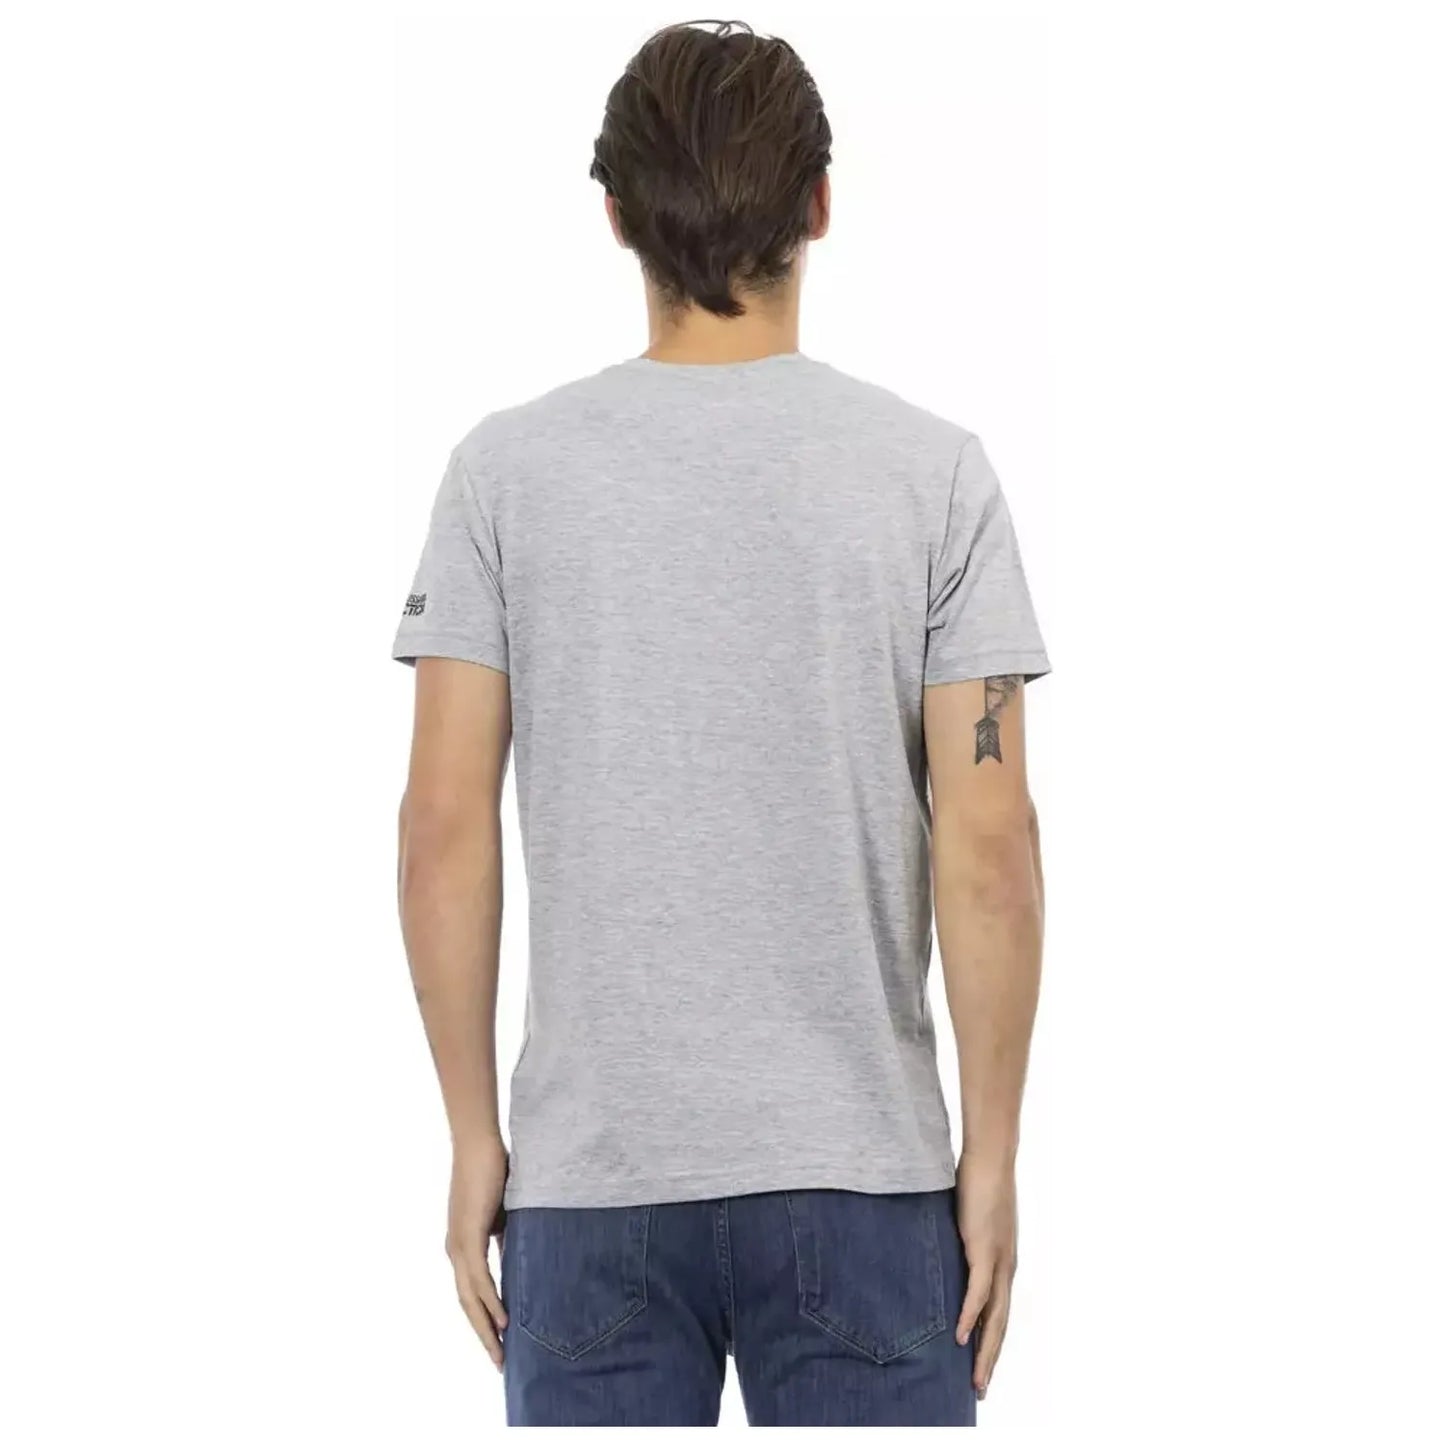 Trussardi Action V-Neck Front Print Short Sleeve Tee - Elegant Gray gray-cotton-t-shirt-8